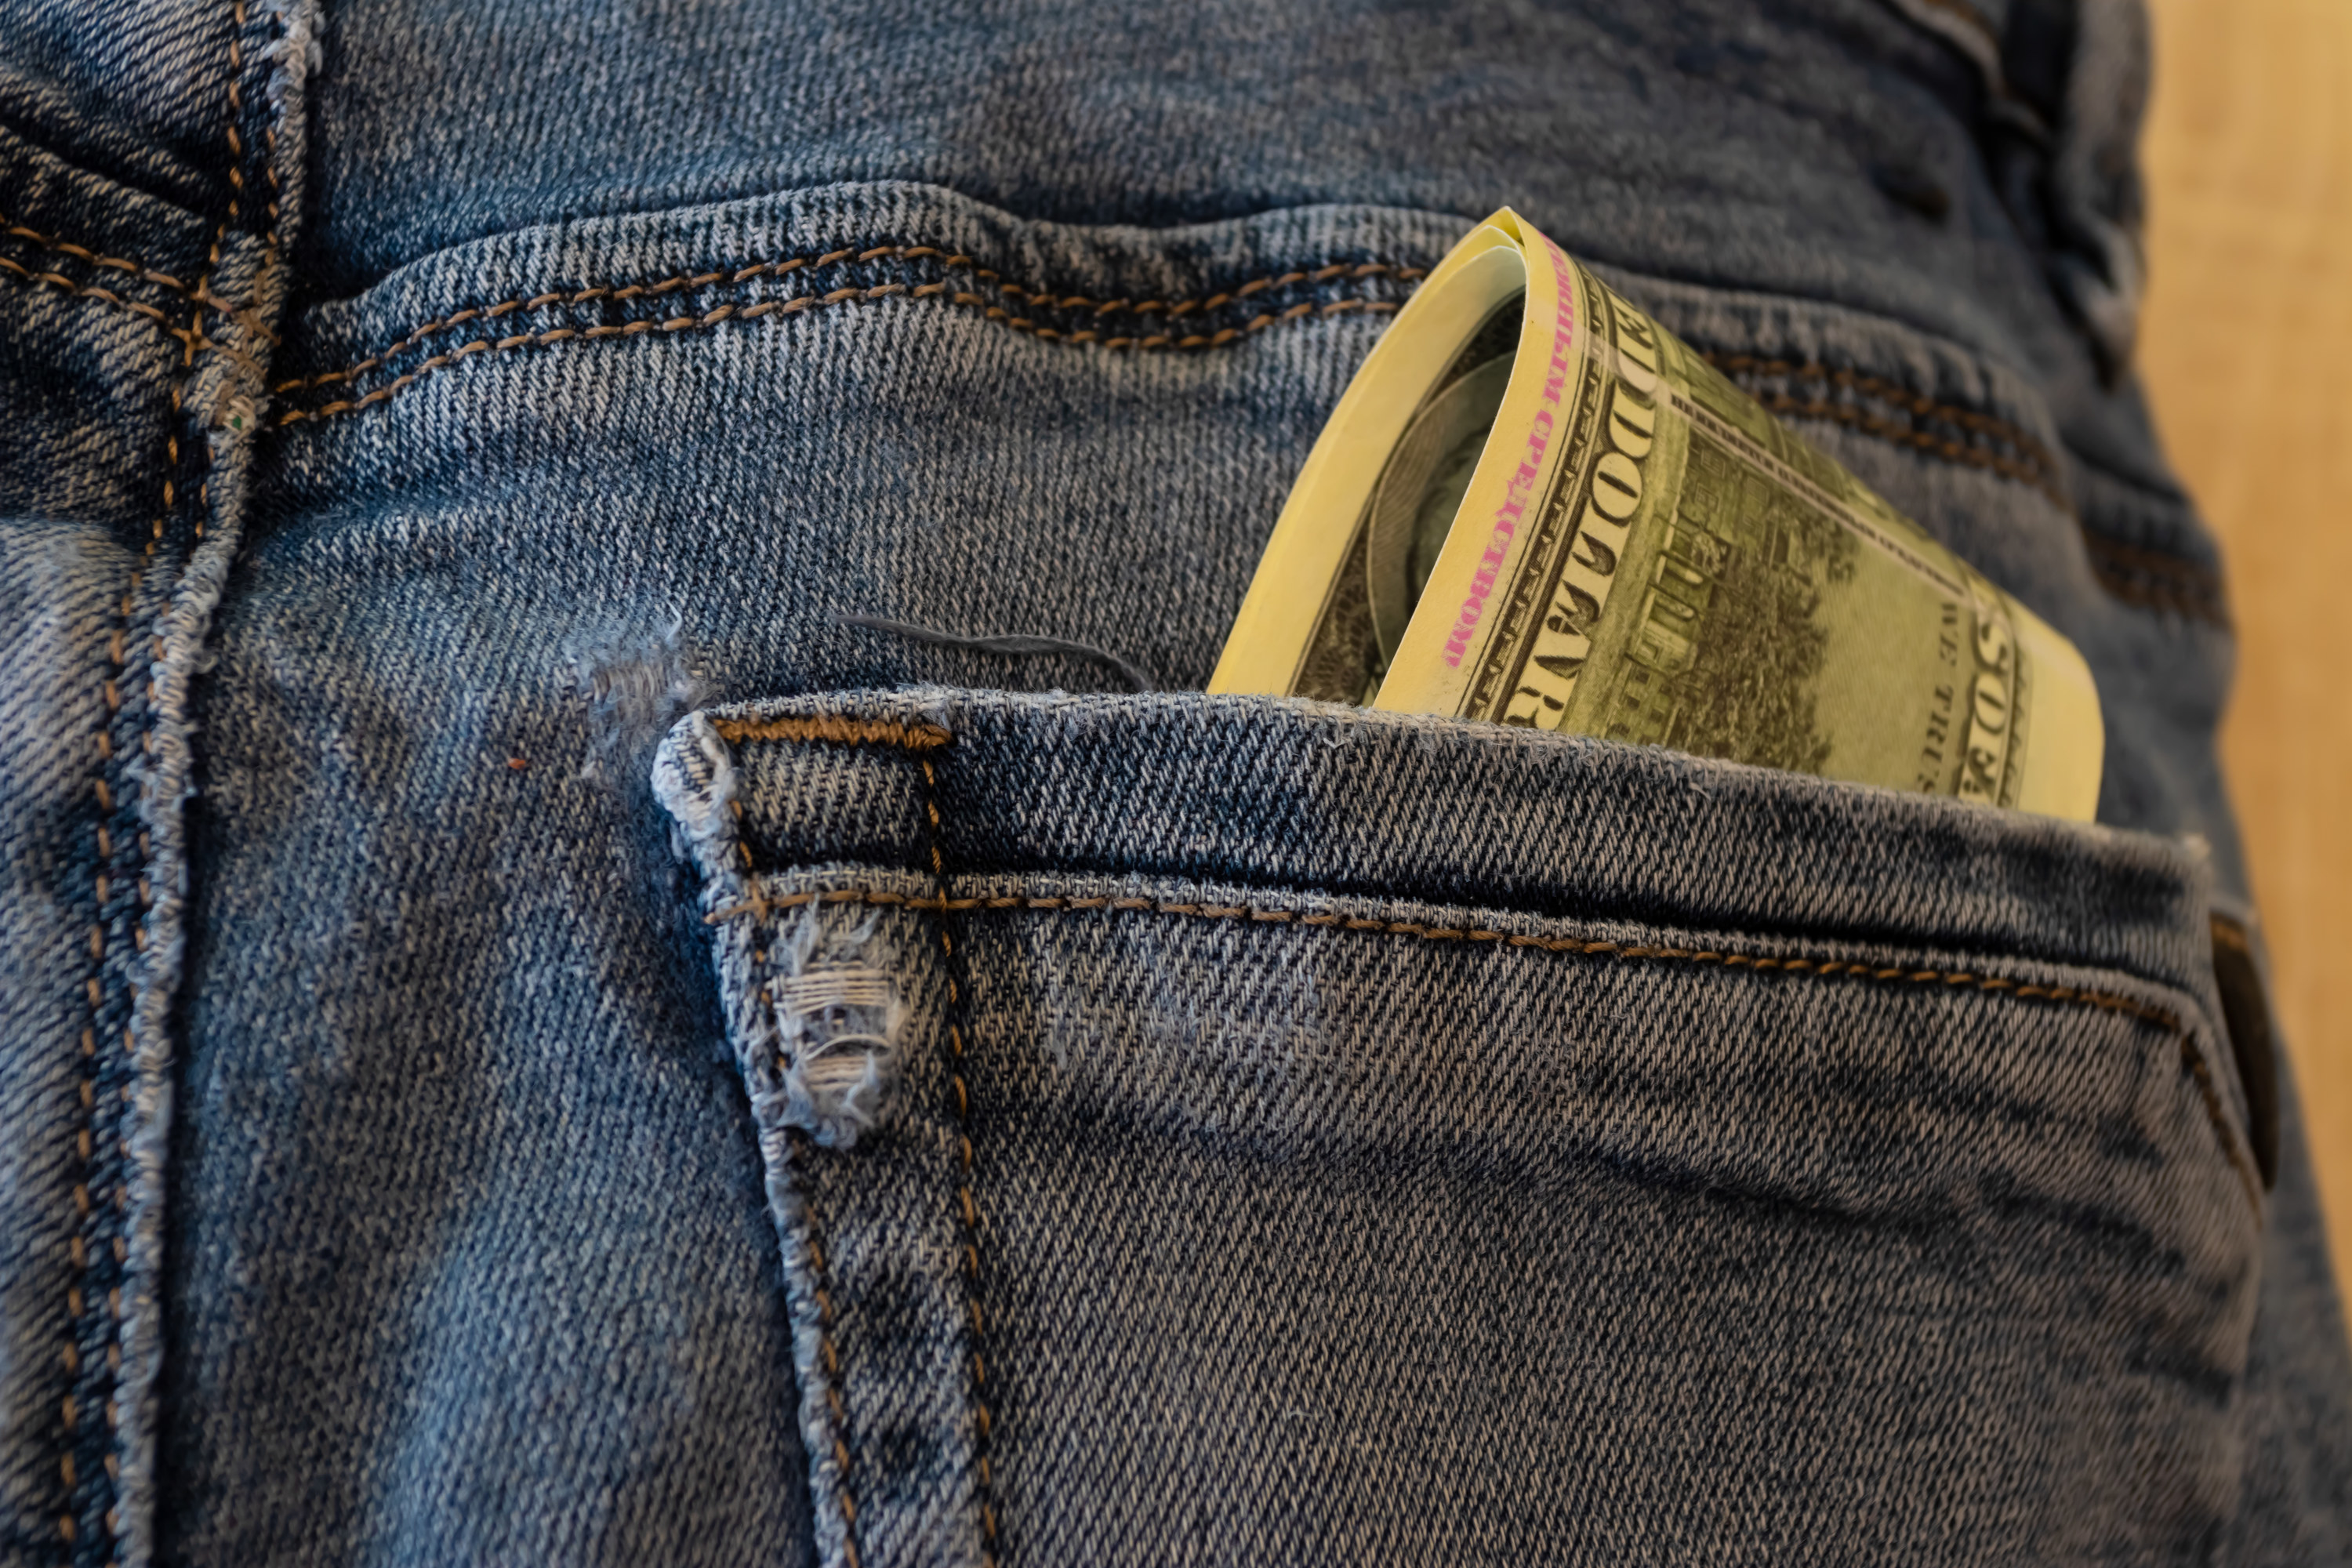 Cash folded up in the back pocket of jeans